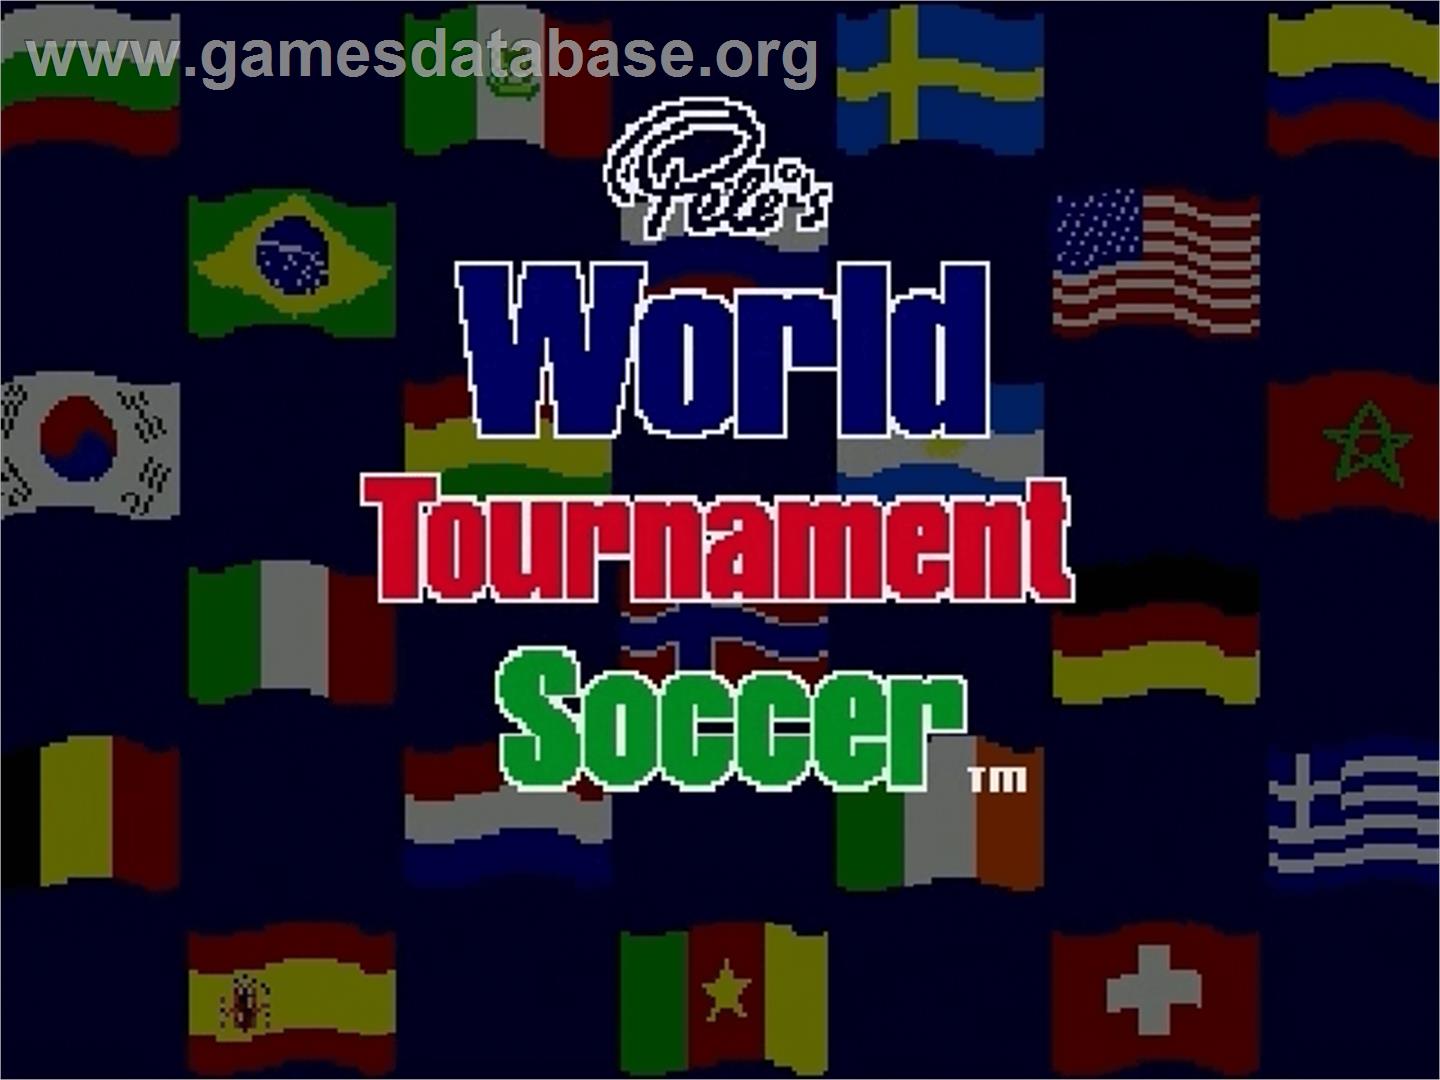 Pelé II: World Tournament Soccer - Sega Genesis - Artwork - Title Screen